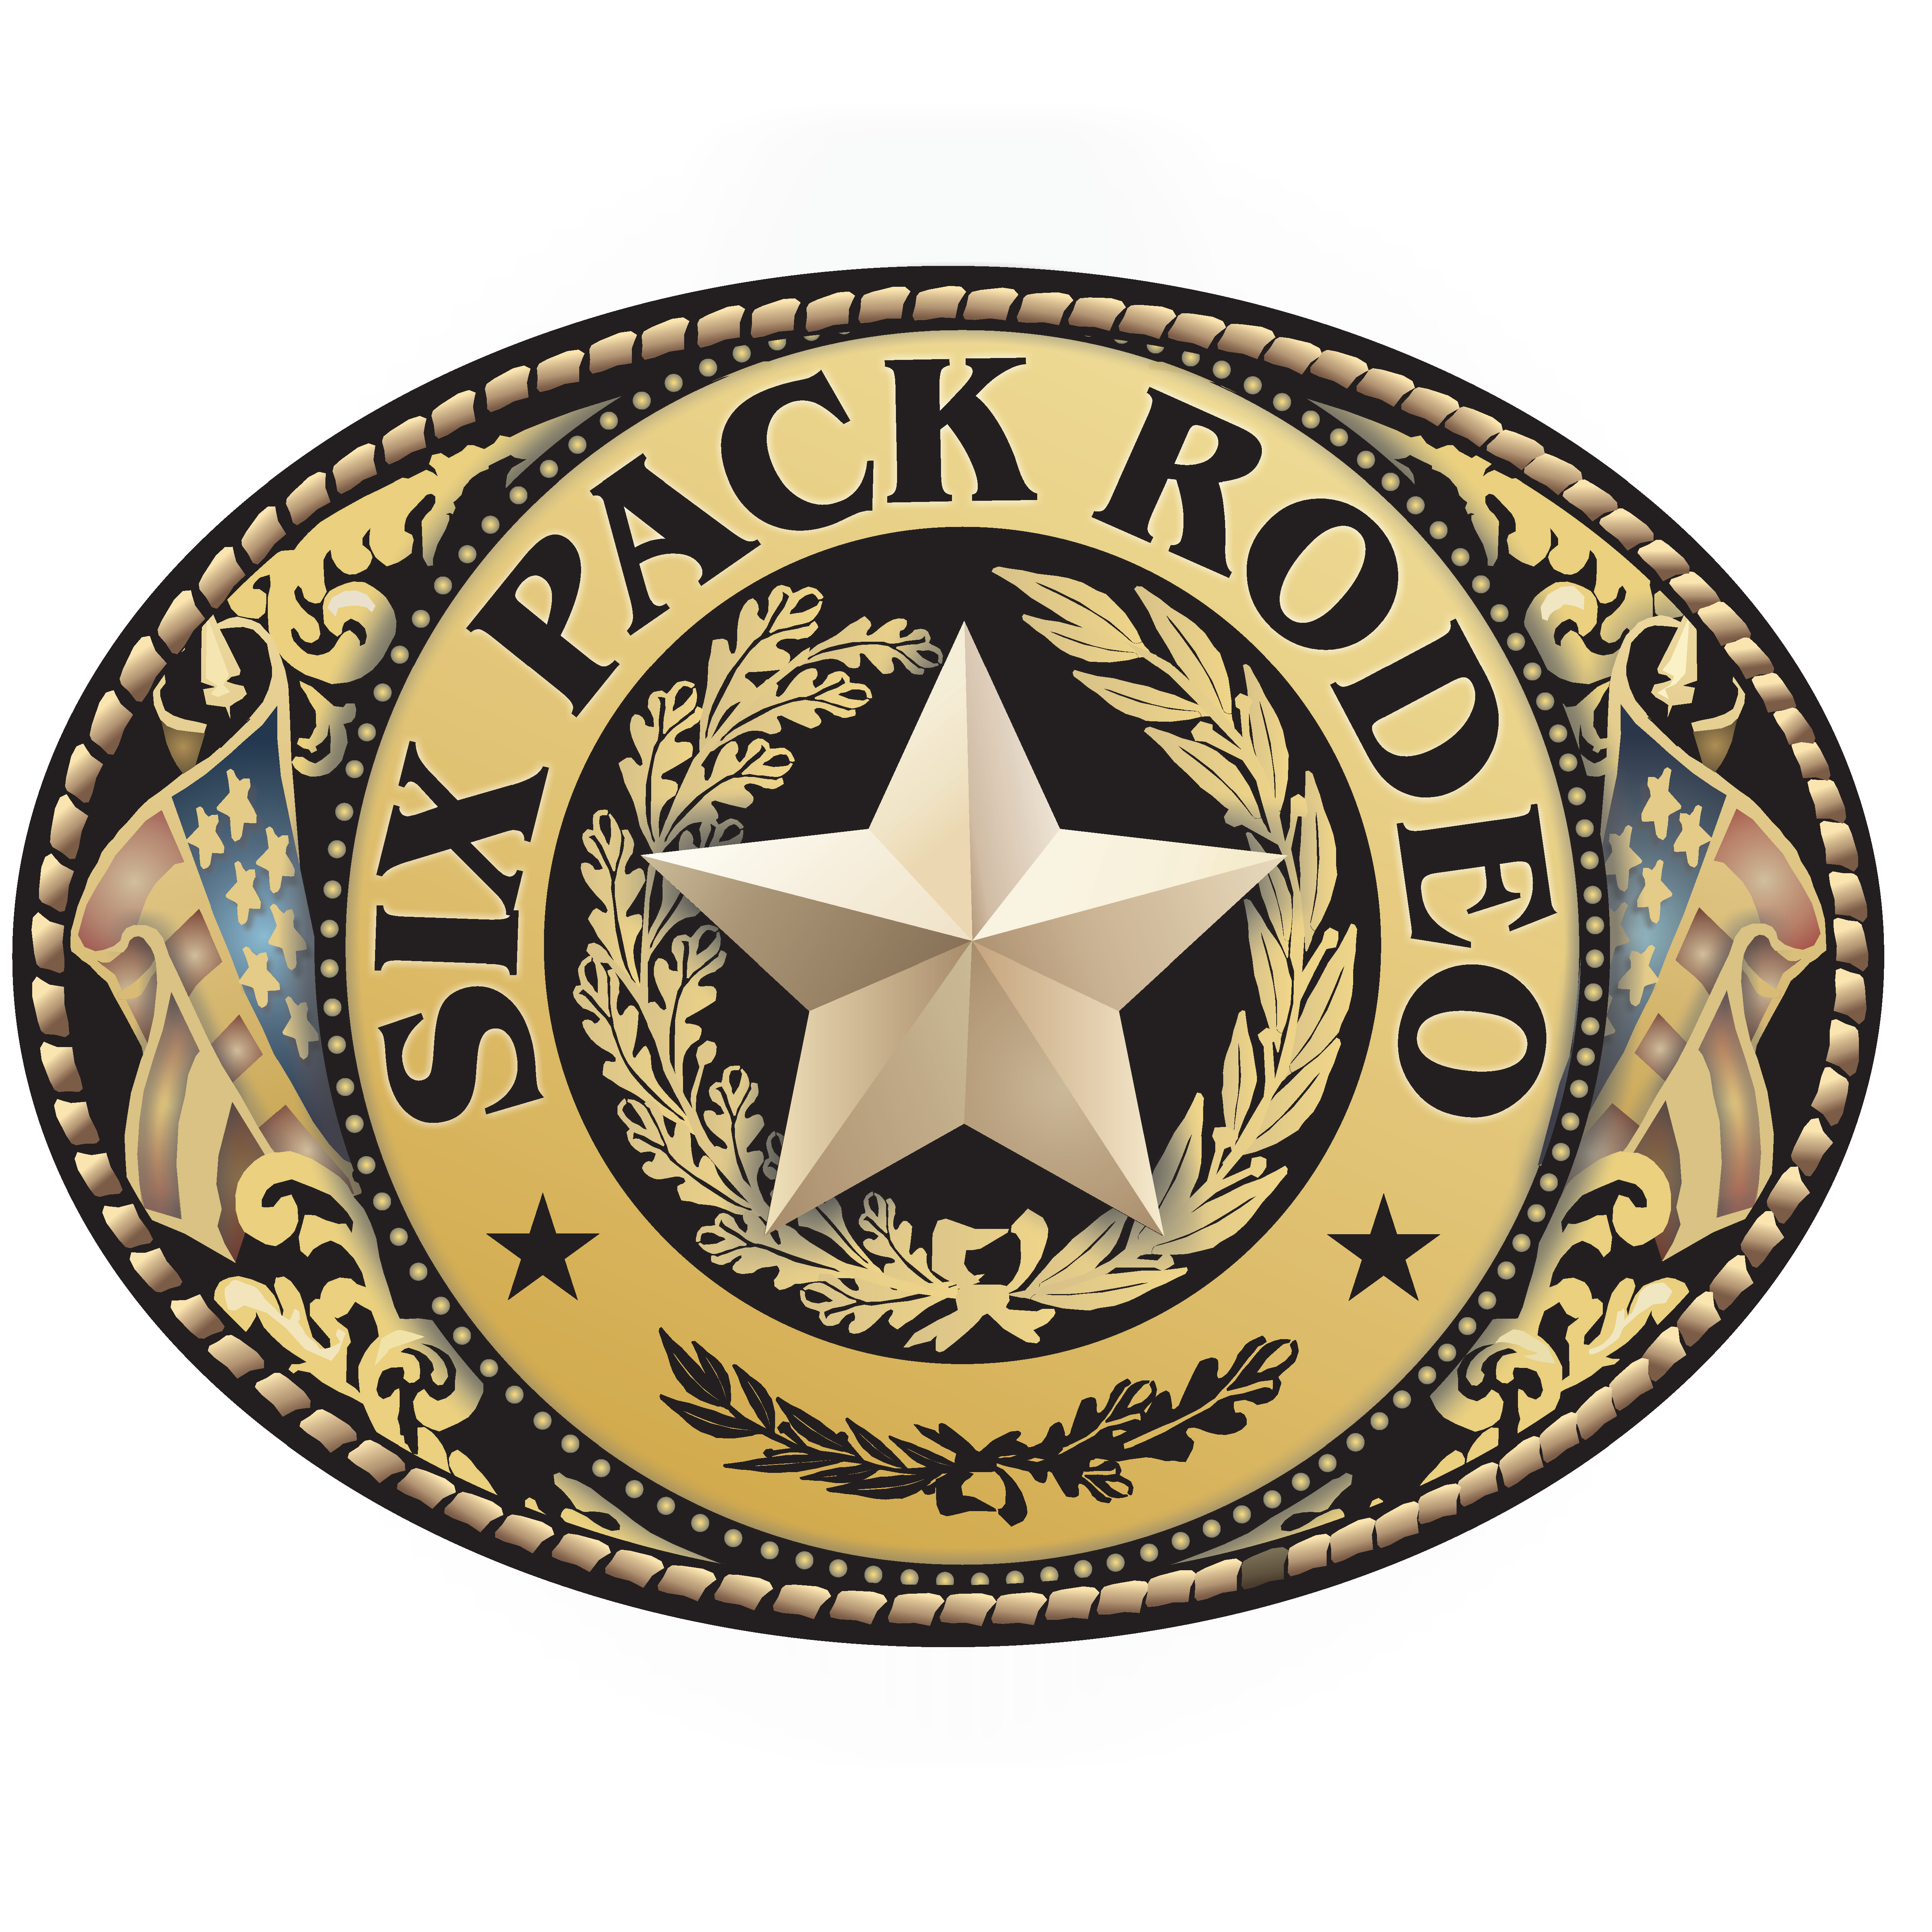 Six Pack Rodeo Logo